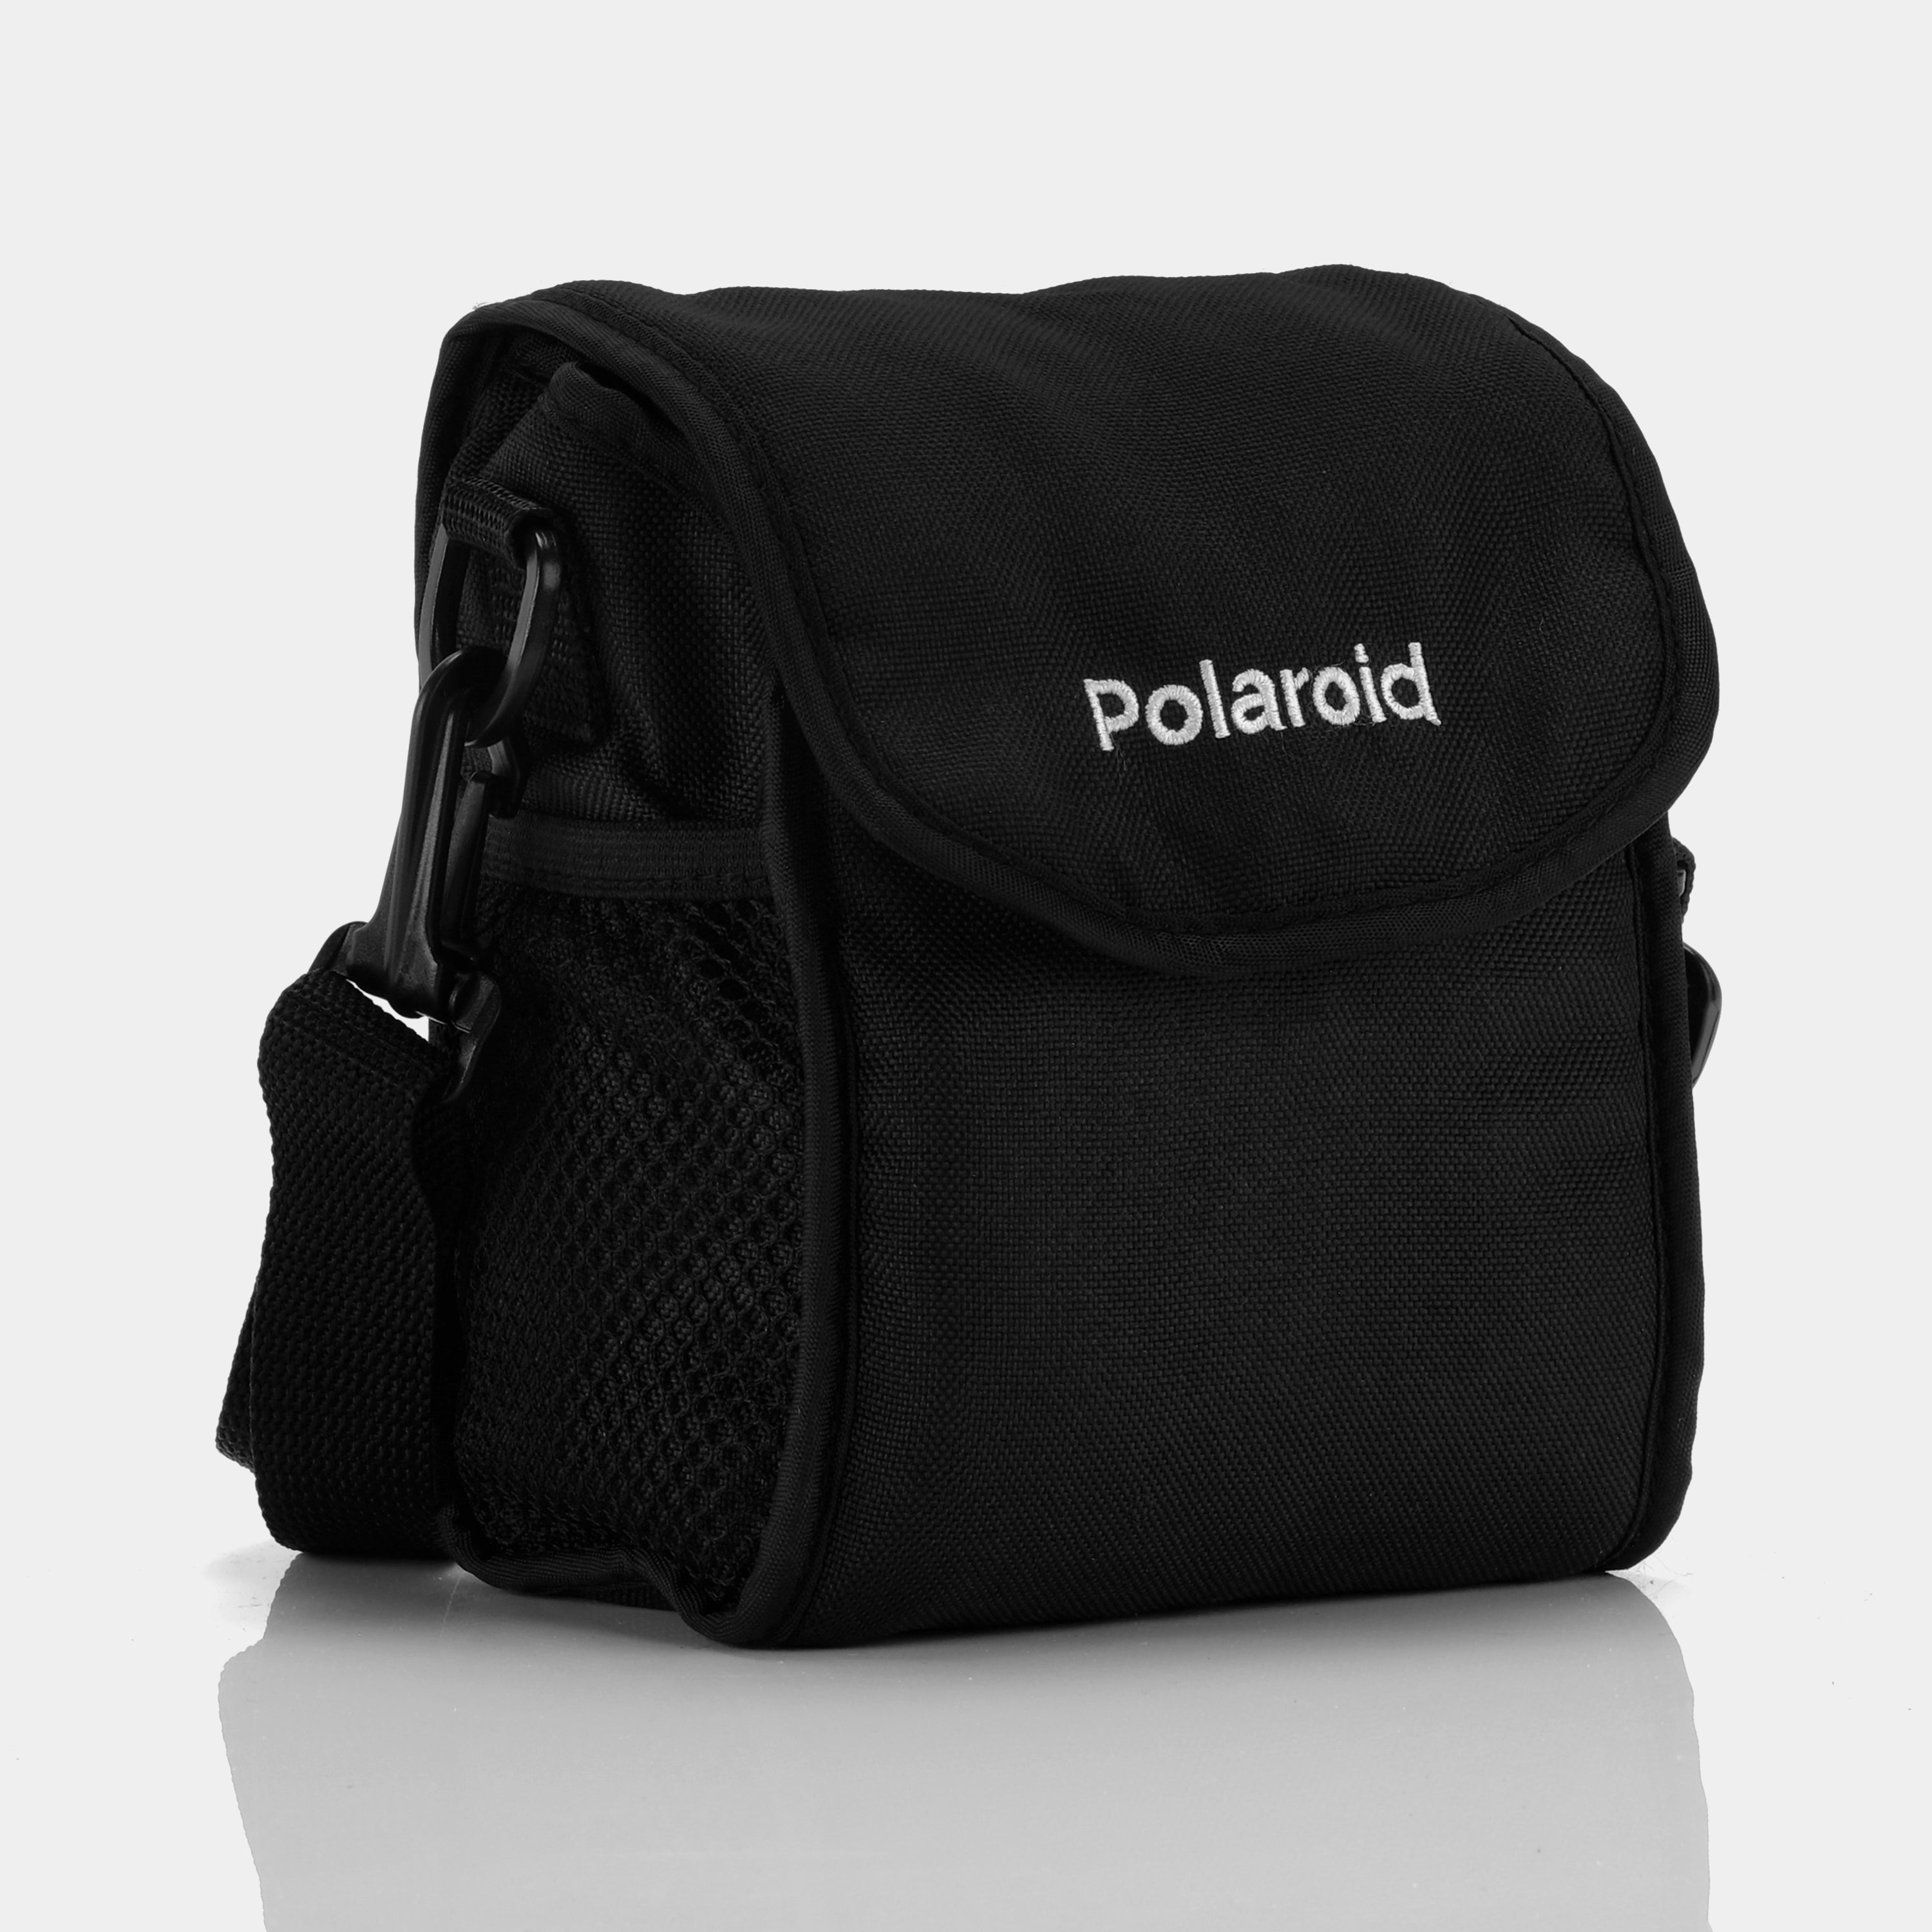 Polaroid Instant Camera Bag